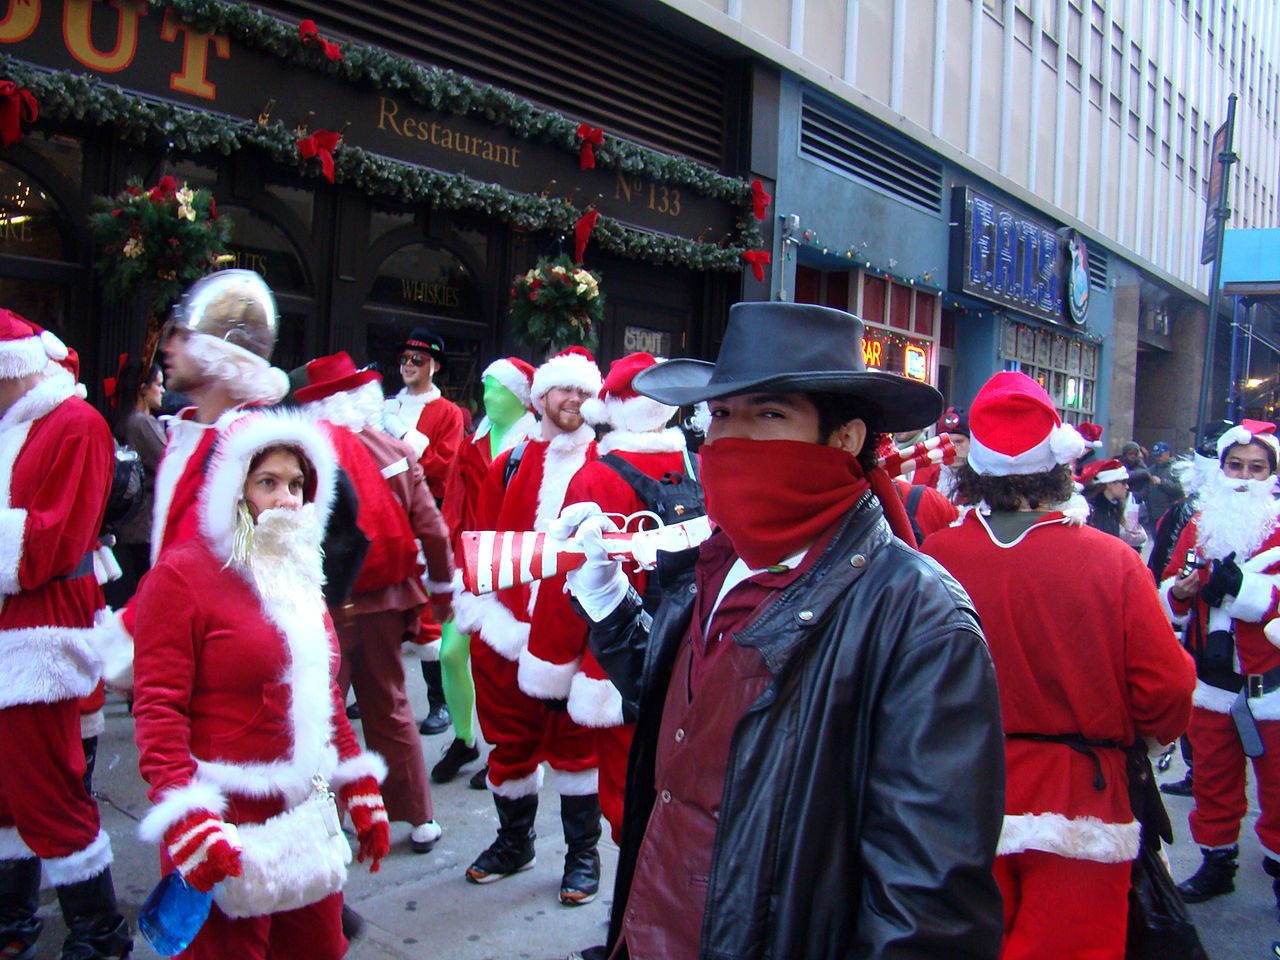 Santa bandit (Image Wikimedia Commons)